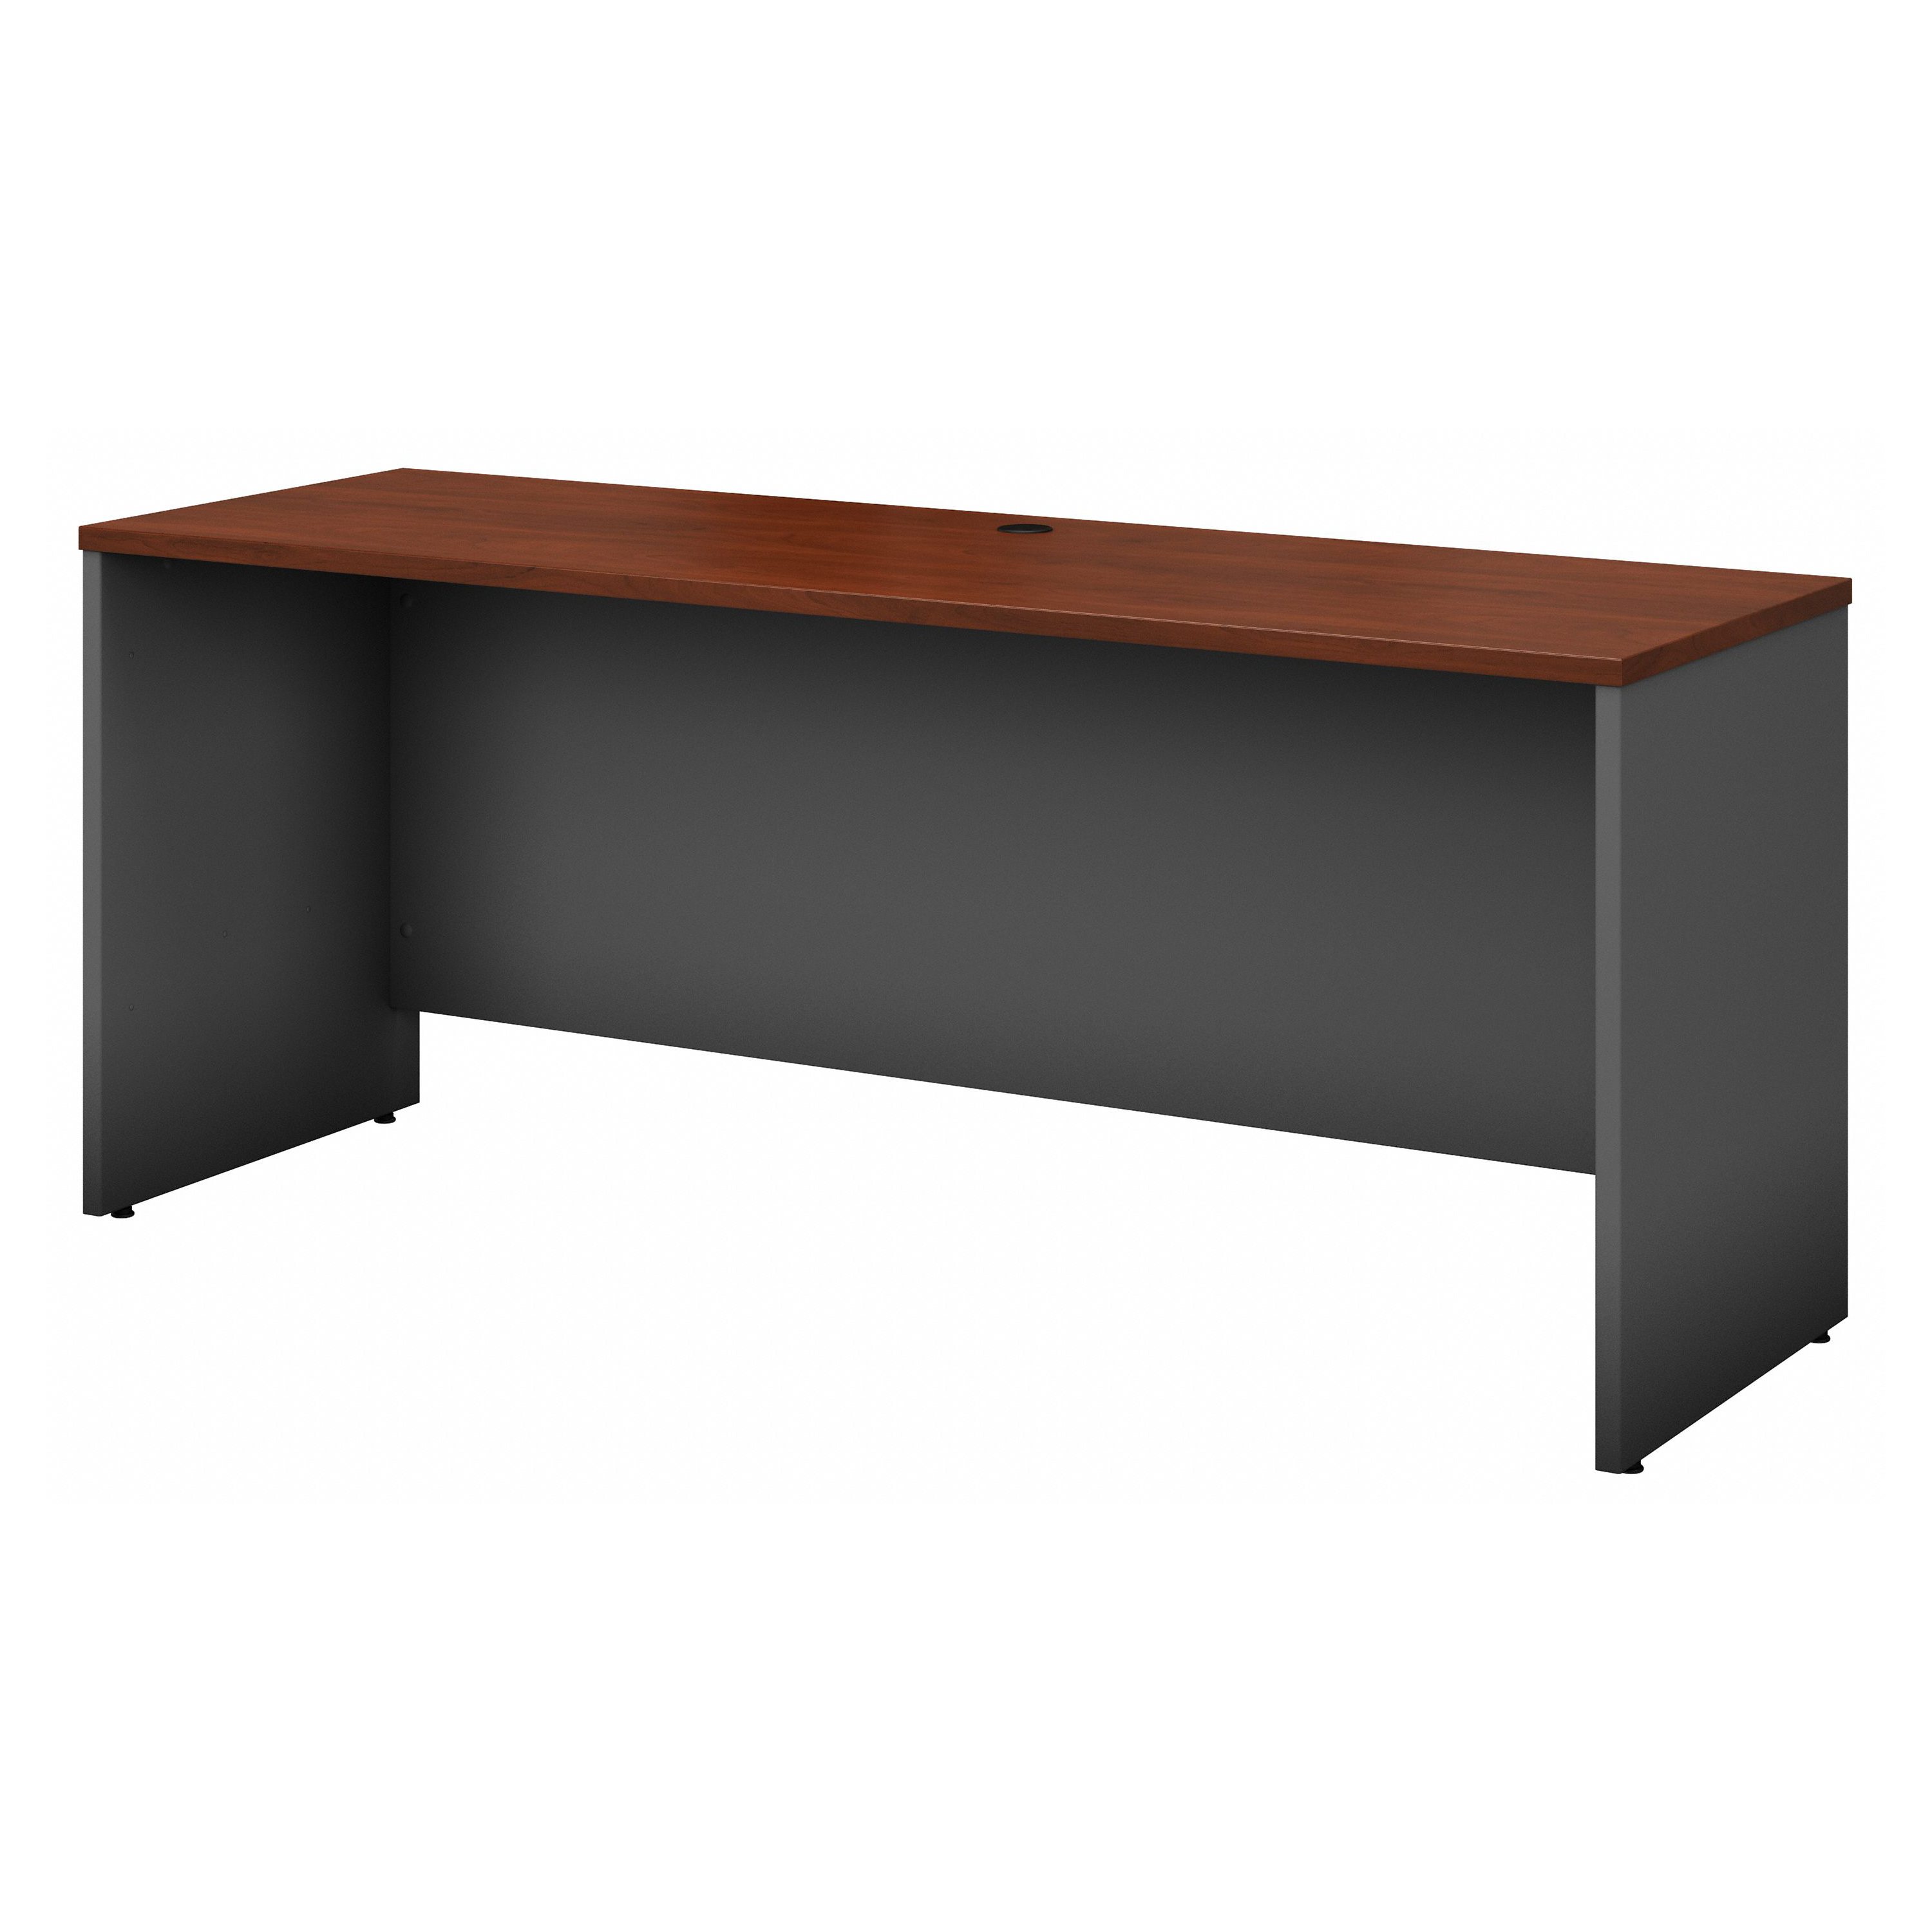 Shop Bush Business Furniture Series C 72W x 24D Credenza Desk 02 WC24426 #color_hansen cherry/graphite gray